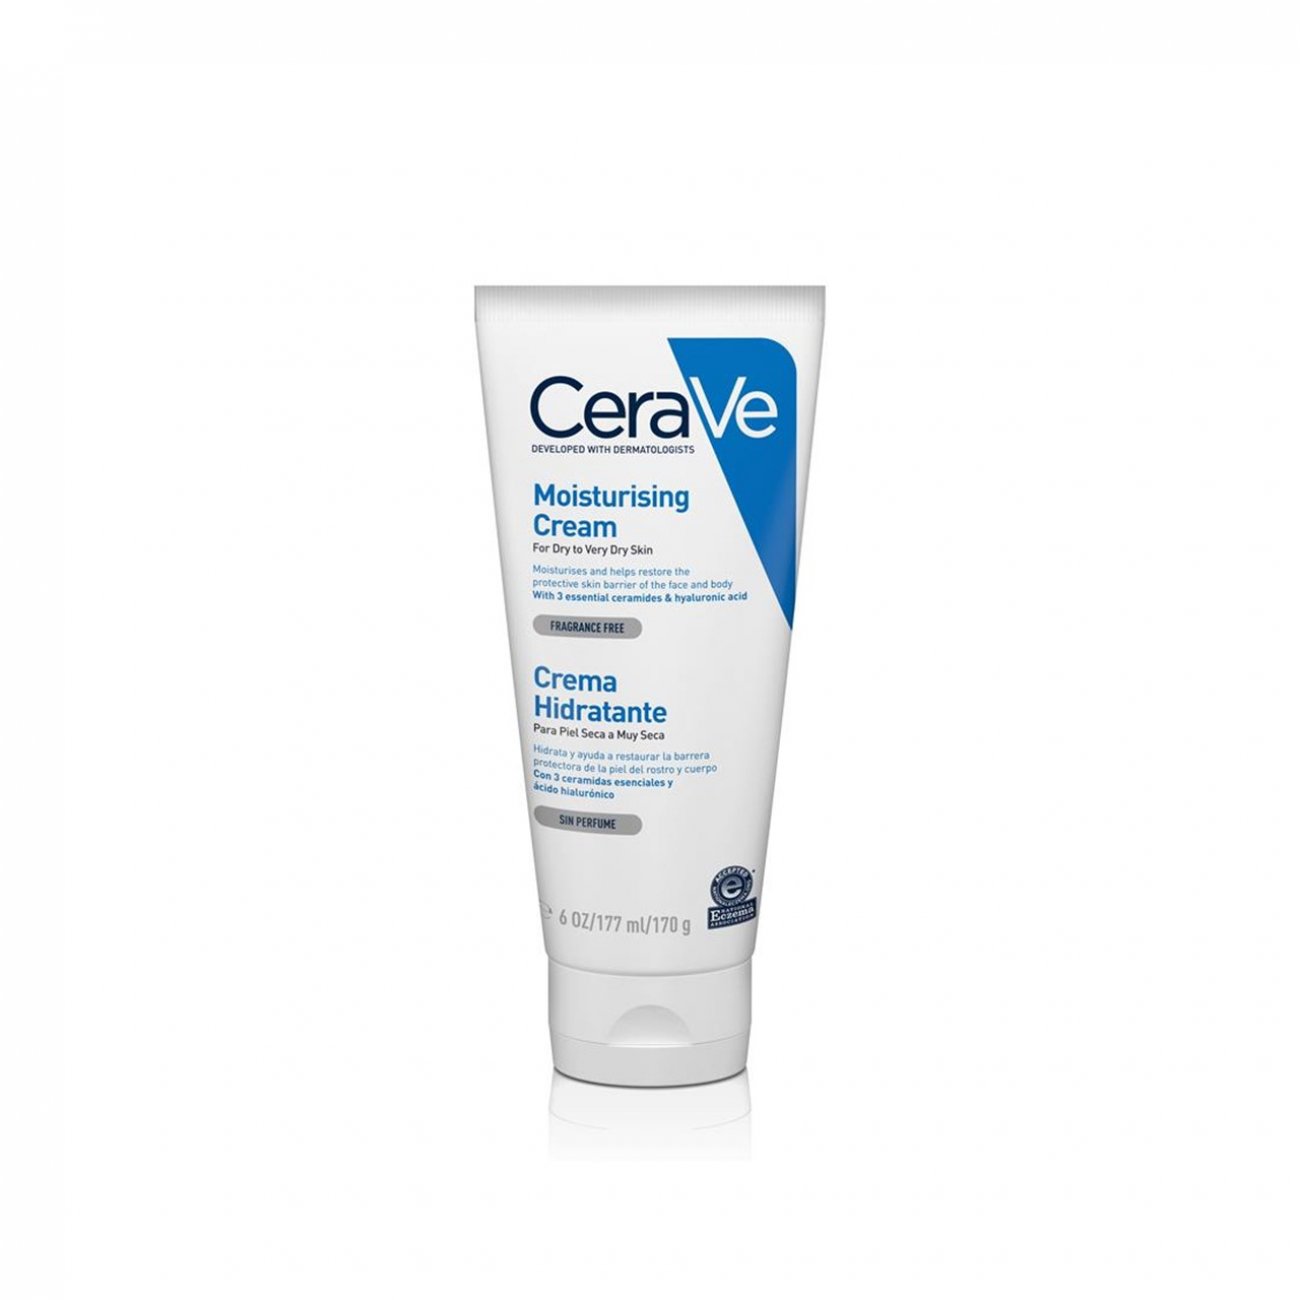 Buy CeraVe Moisturizing Cream to Very Dry Skin · World Wide